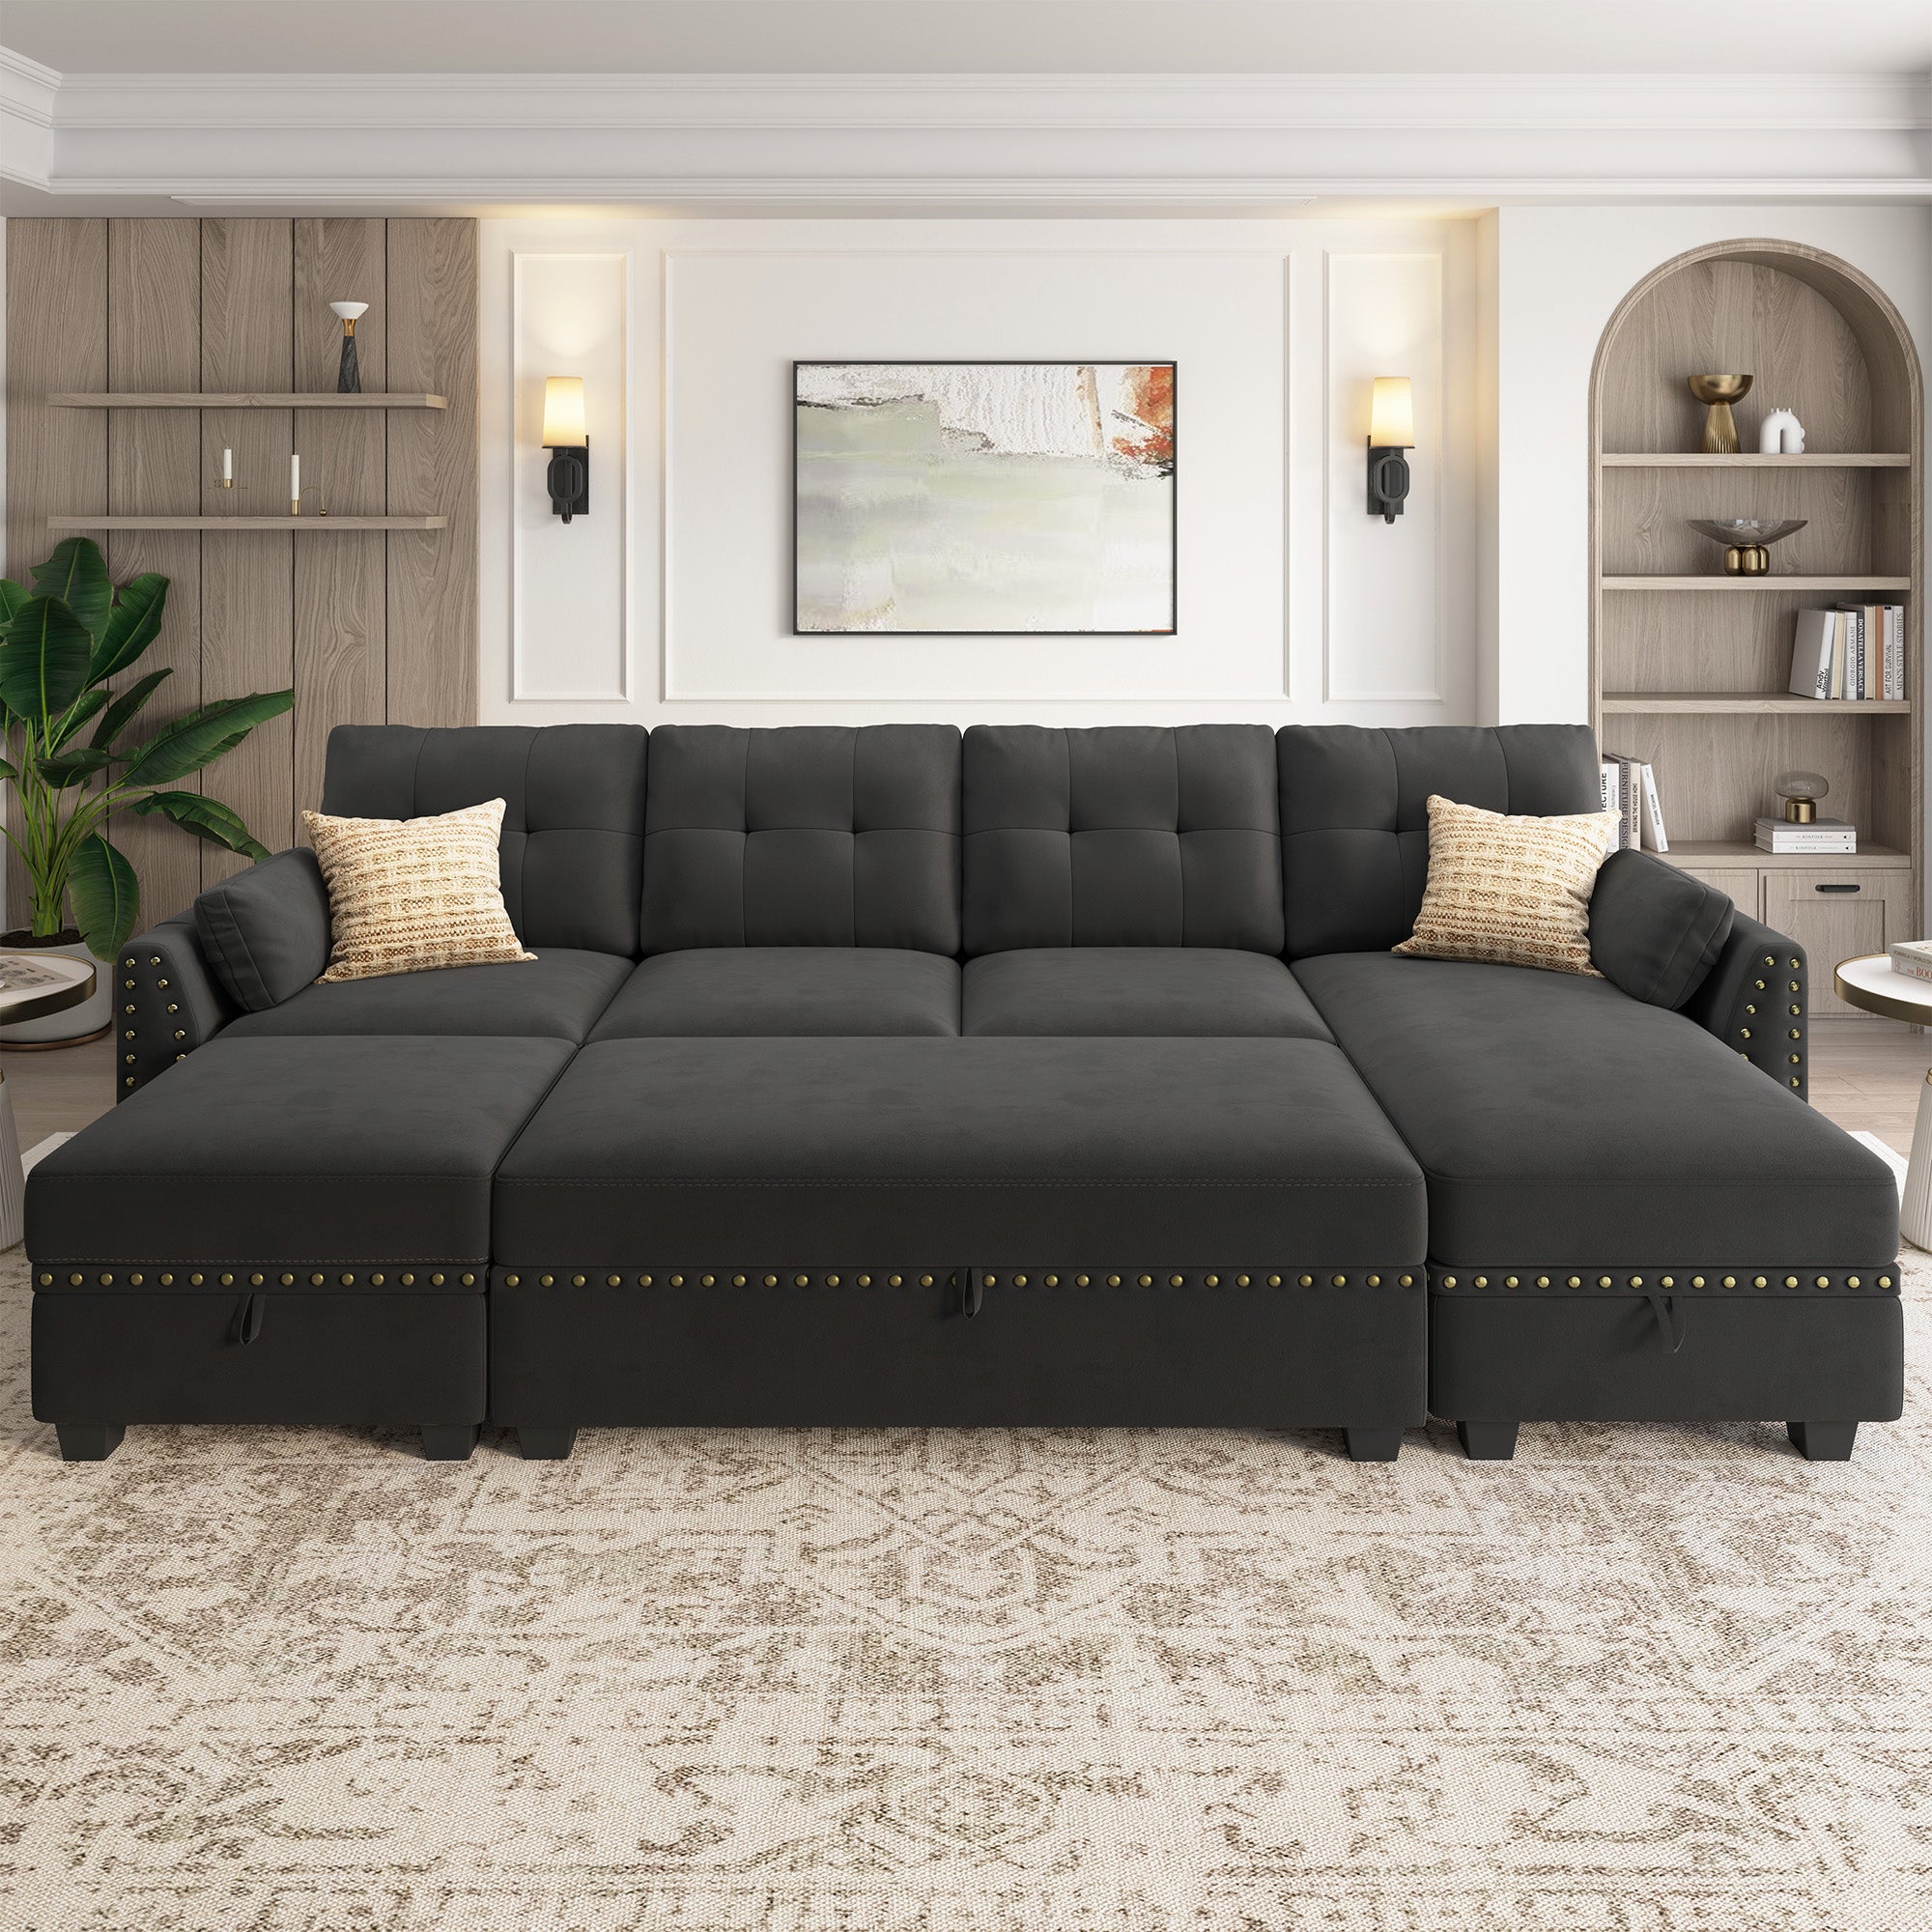 HONBAY Velvet 4-Seat Sectional Sofa Sleeper with Storage